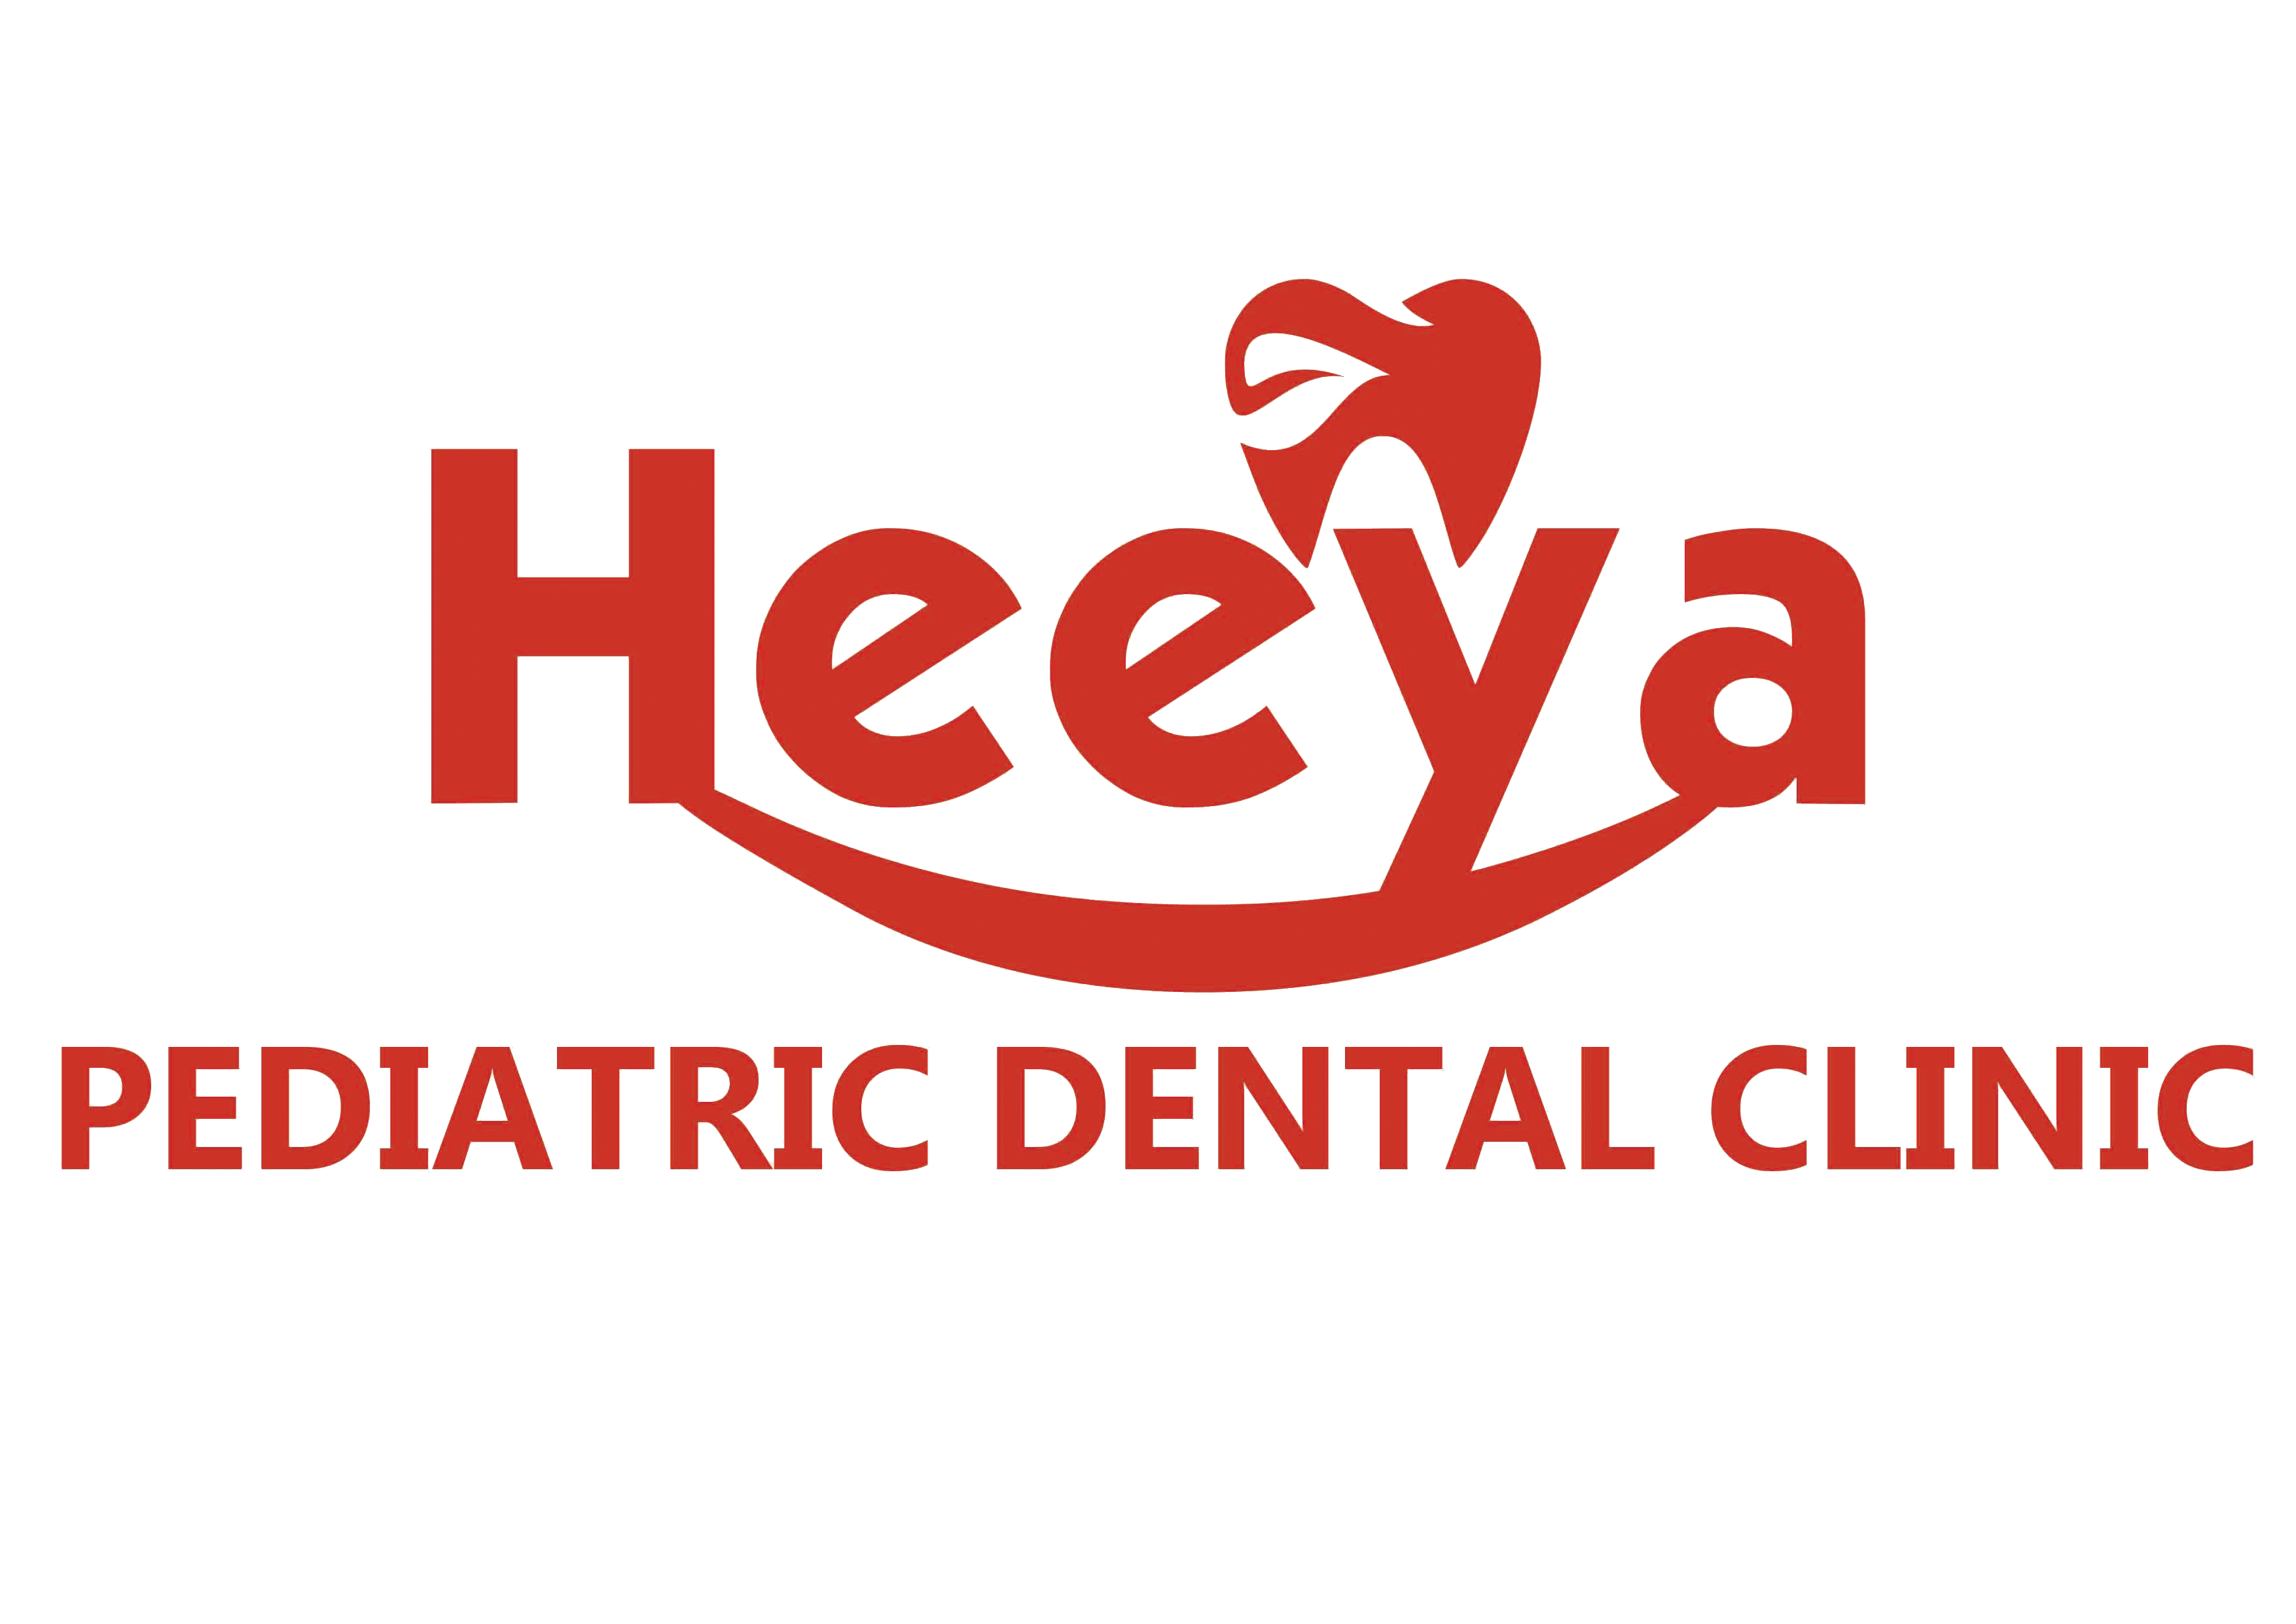 Heeya Pediatric Dental Clinic|Hospitals|Medical Services